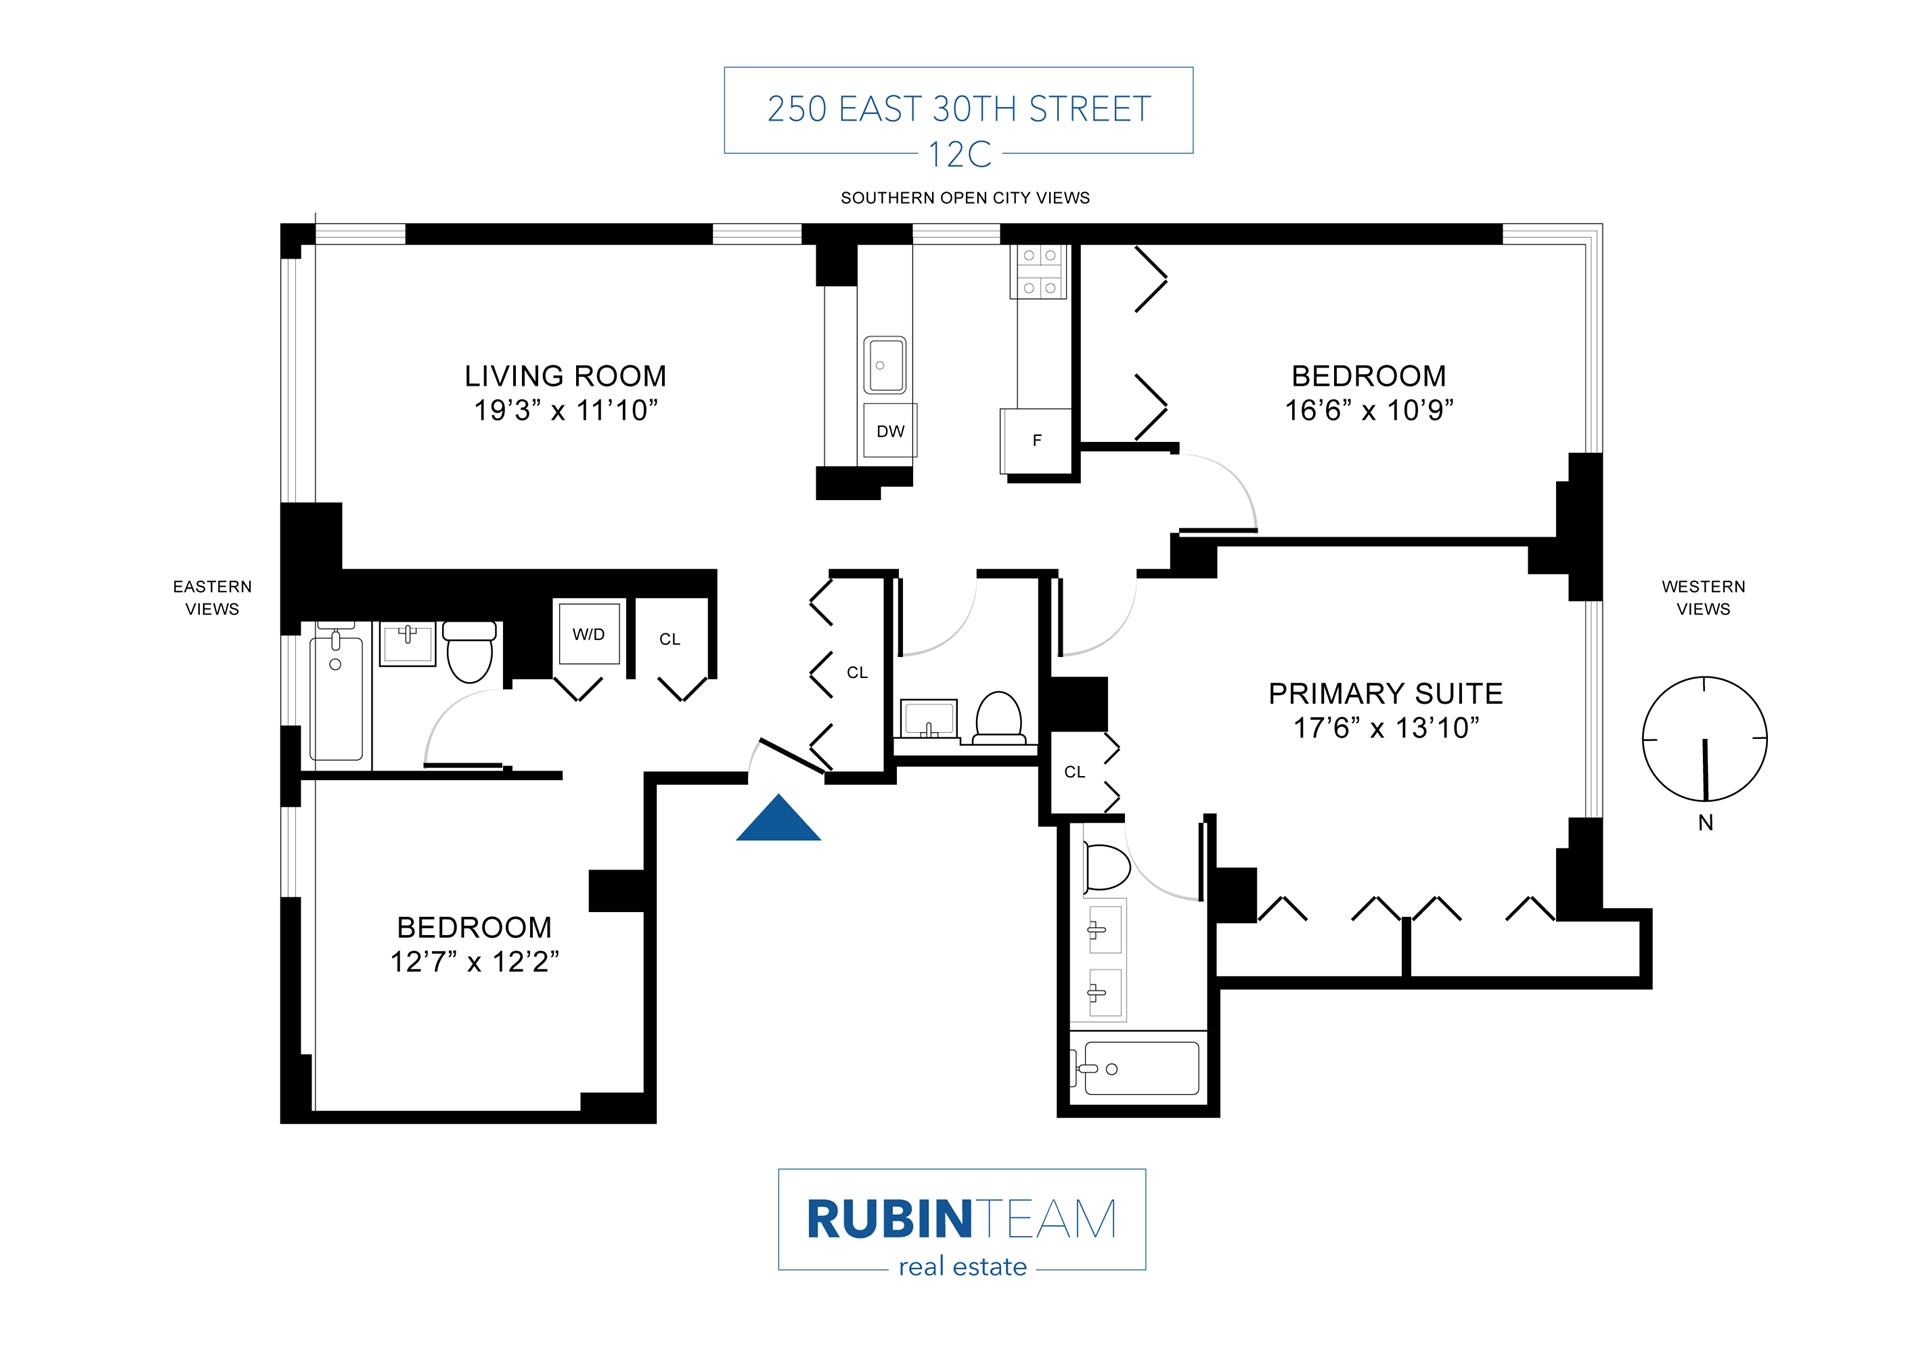 Floorplan for 250 East 30th Street, 12C